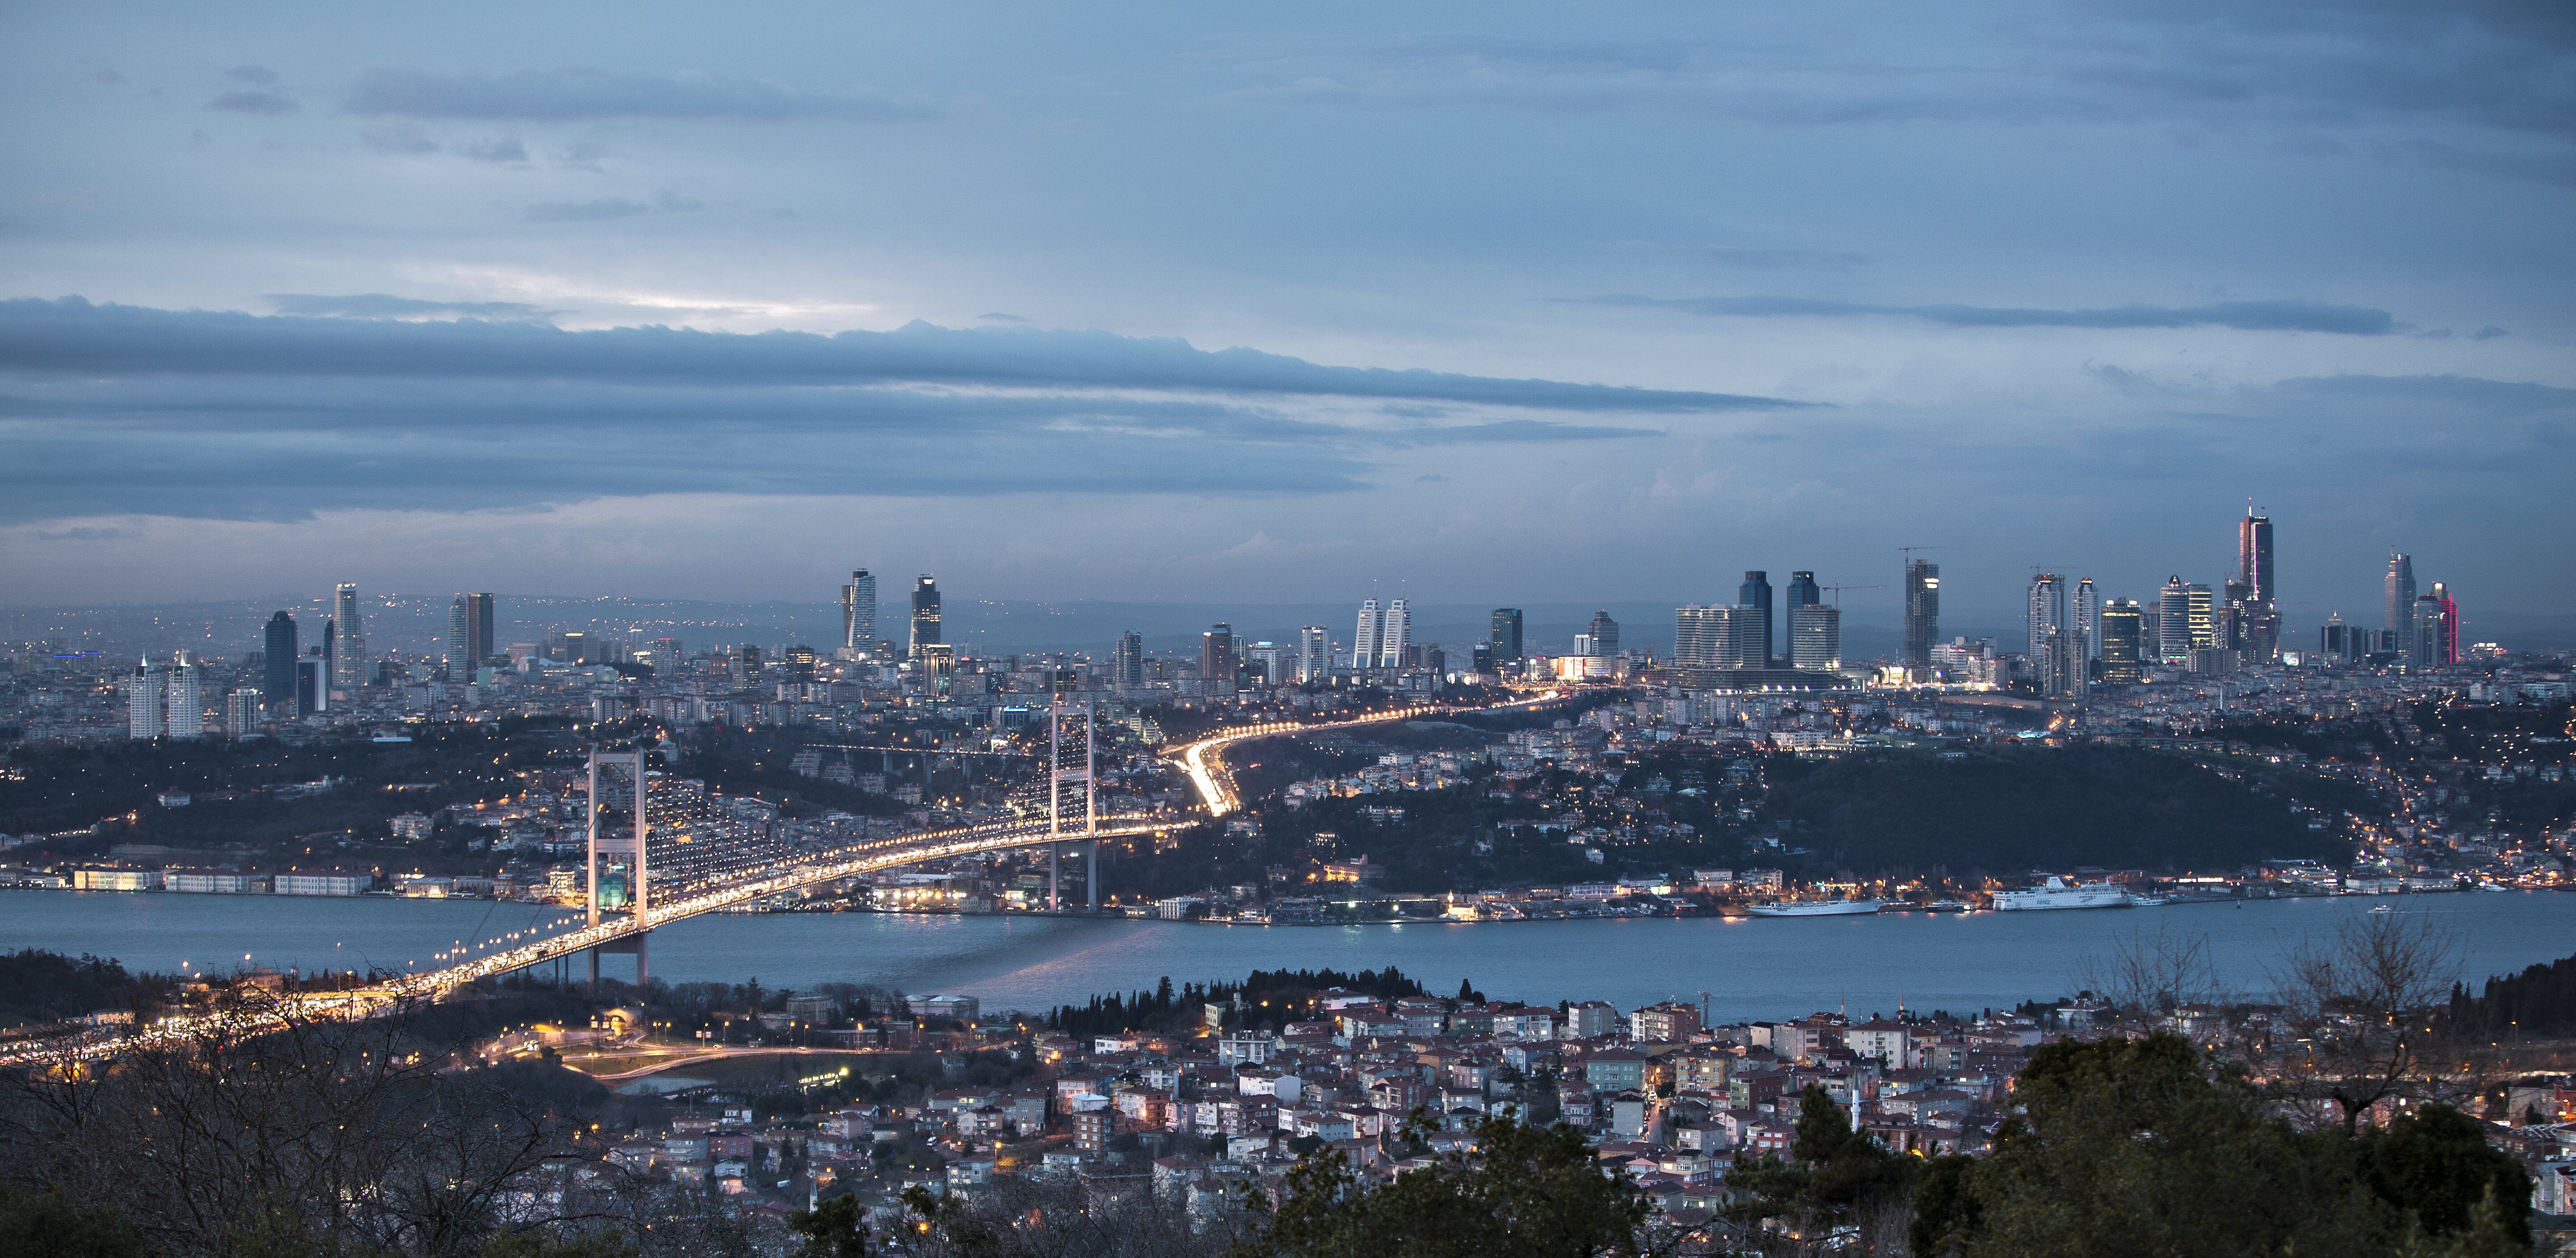 Bosphorus And Bridge At Night 4k Ultra HD Wallpaper Background